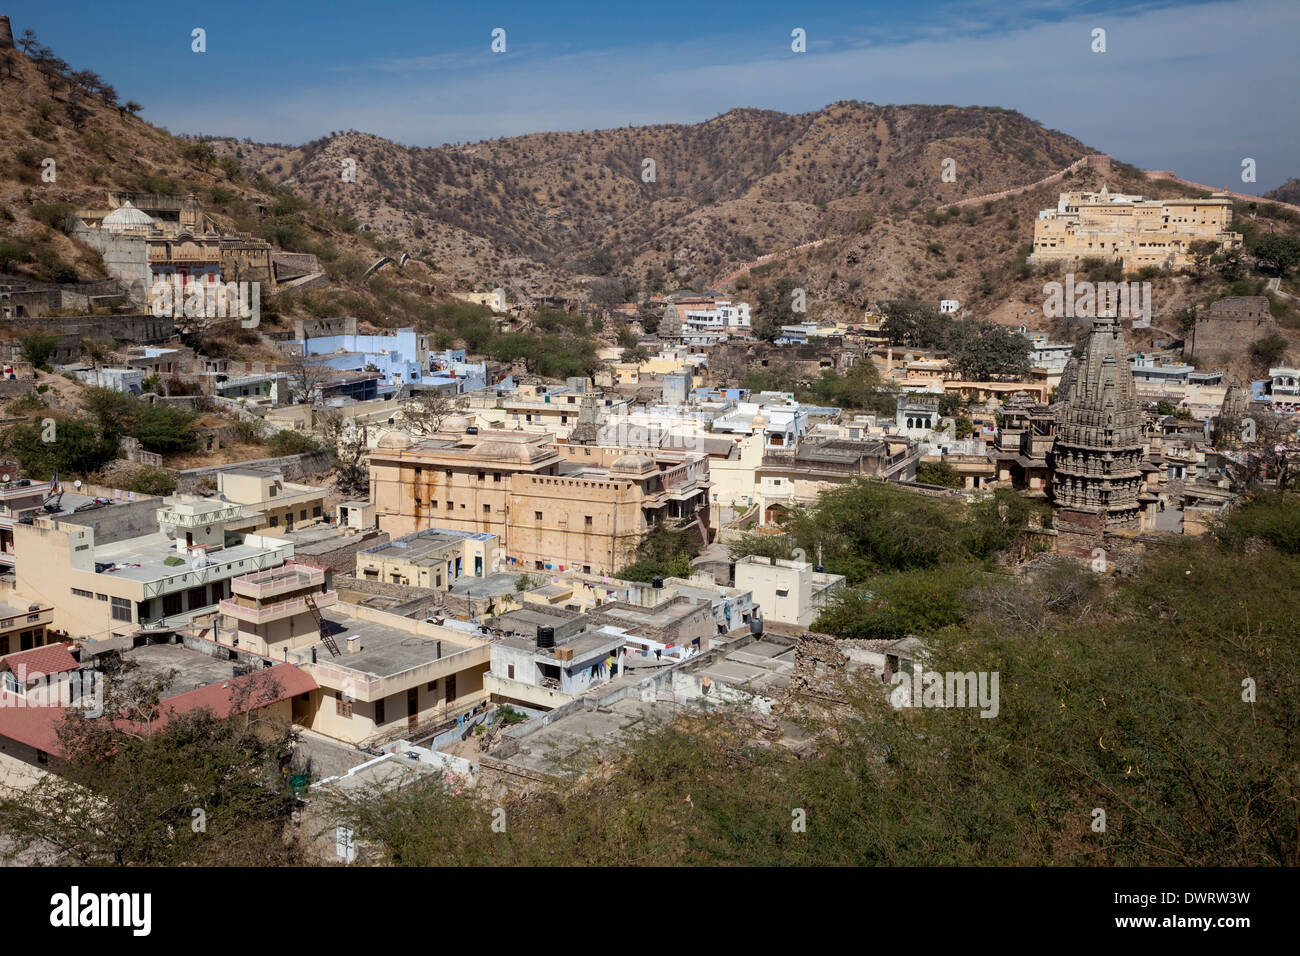 Amer (o ambra) Village, vicino a Jaipur, Rajasthan, India. Foto Stock